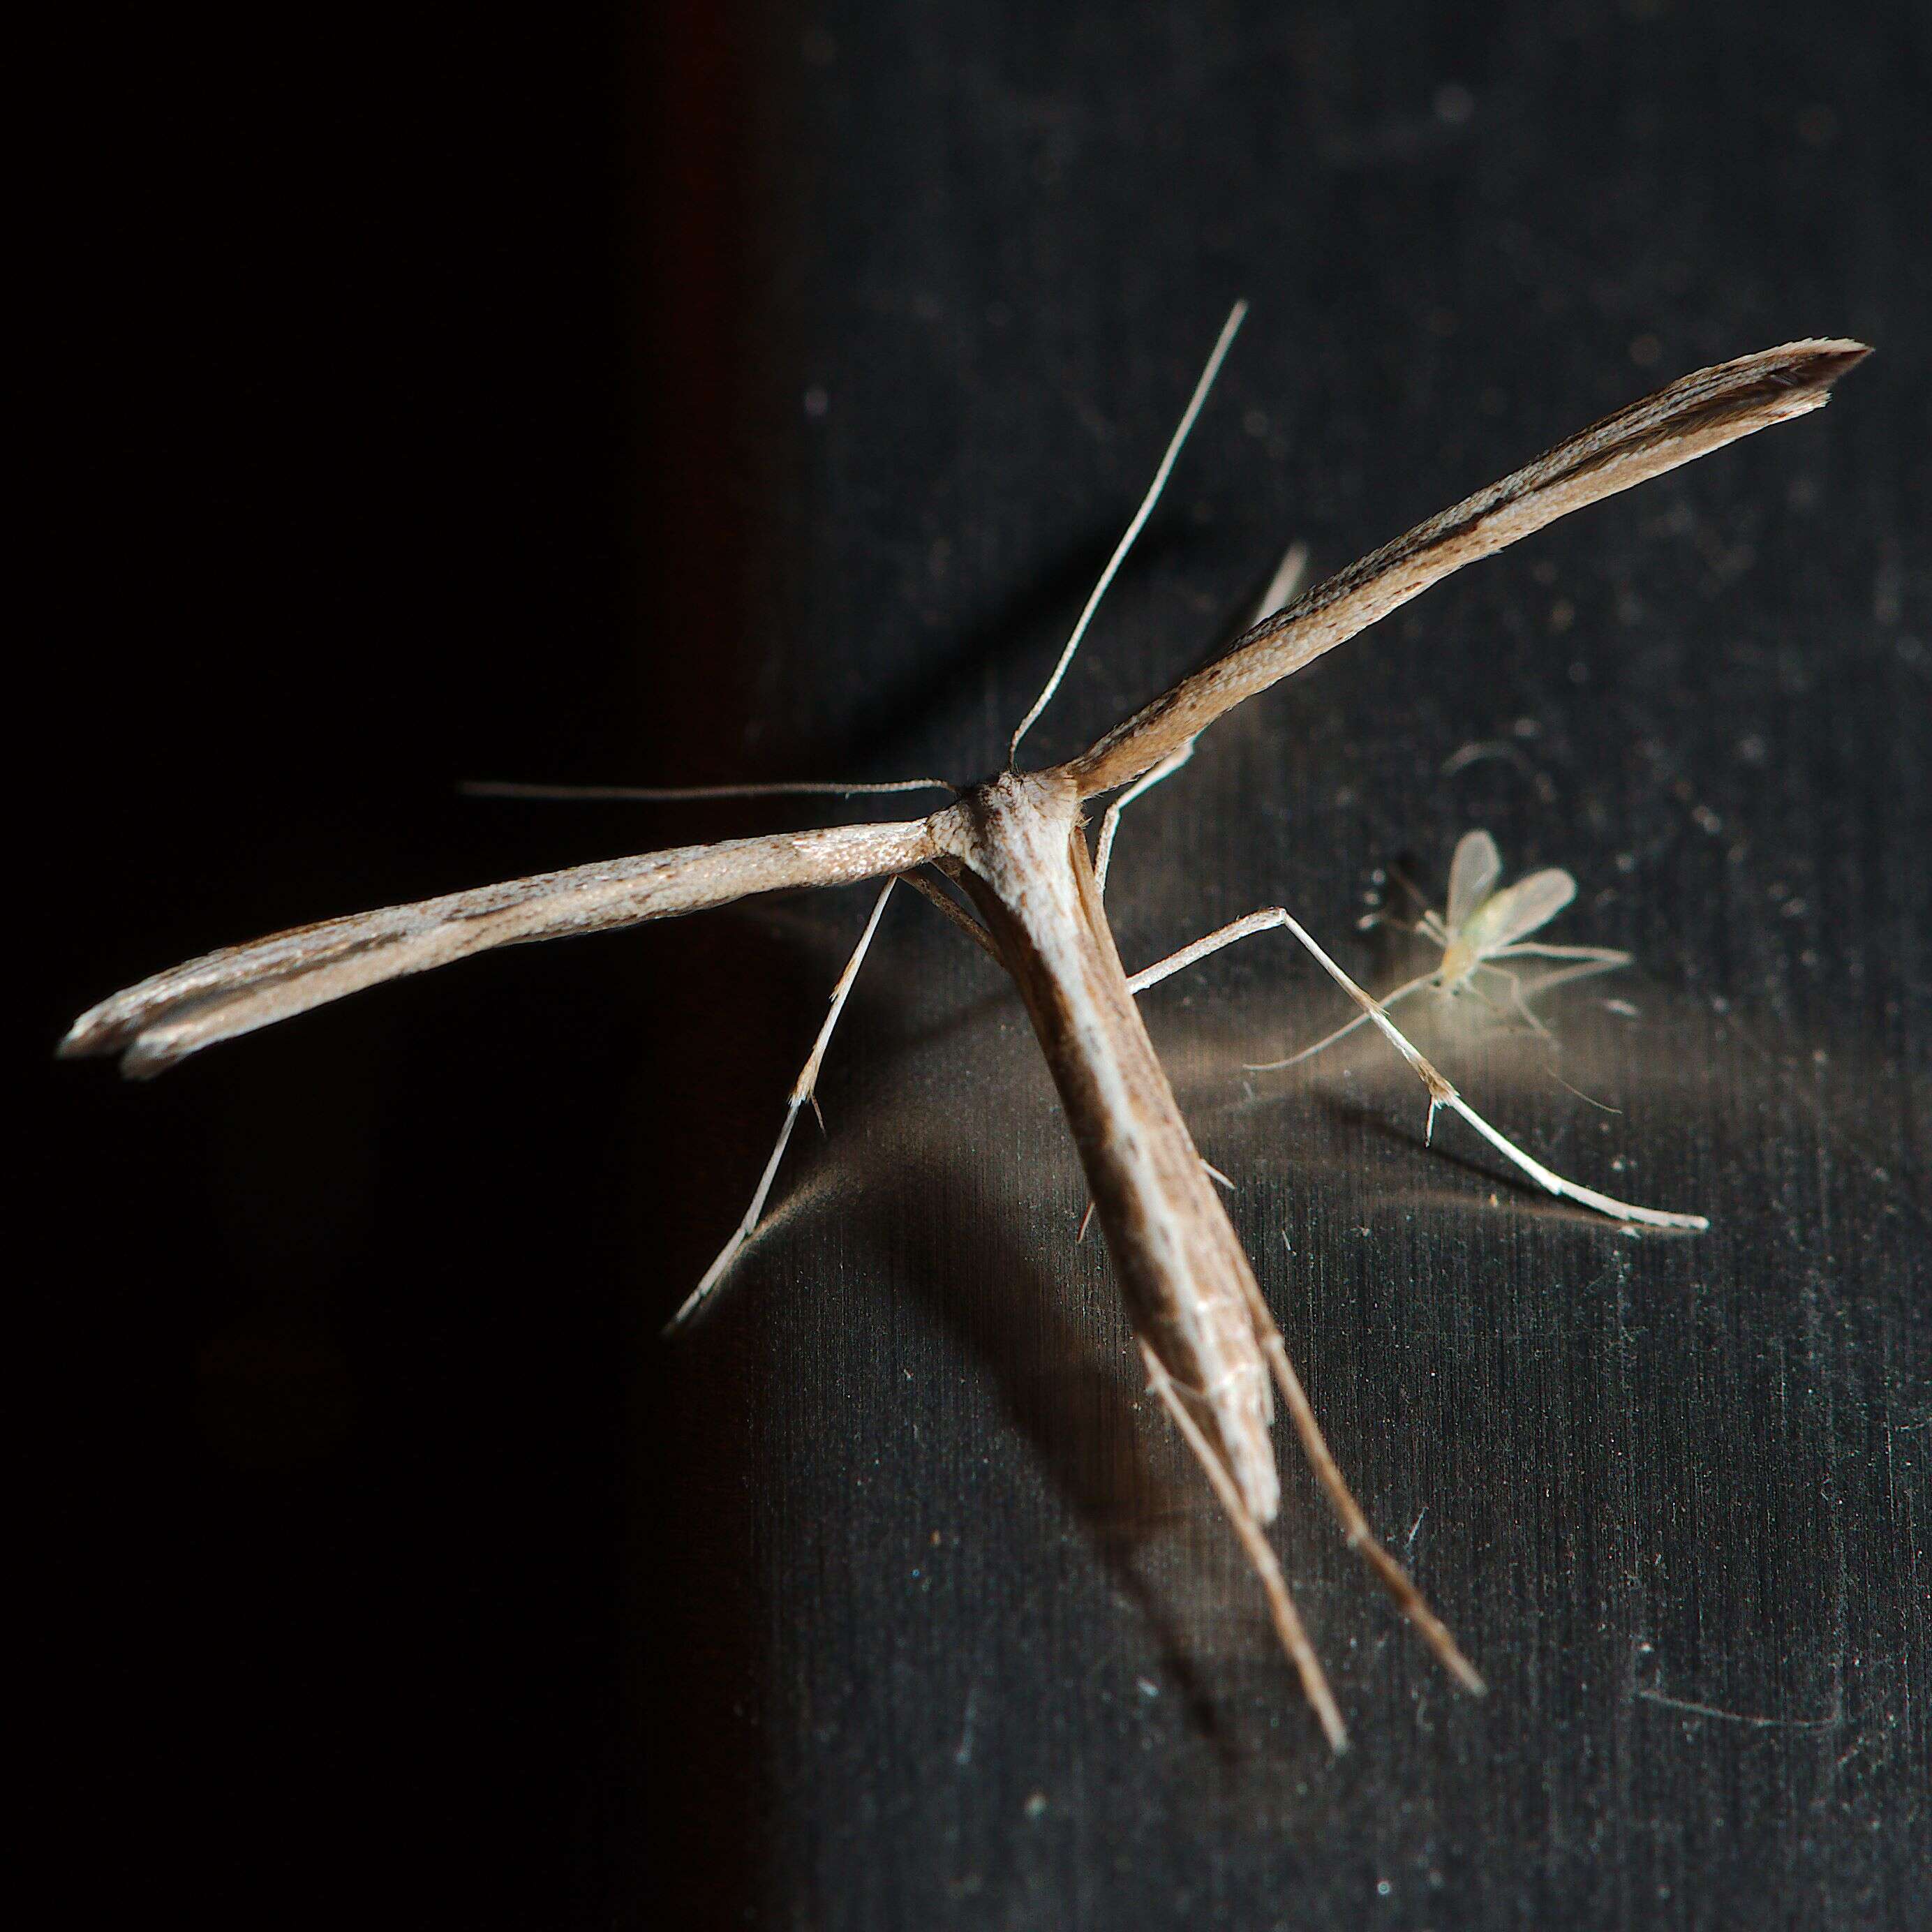 Image of Pterophoroidea